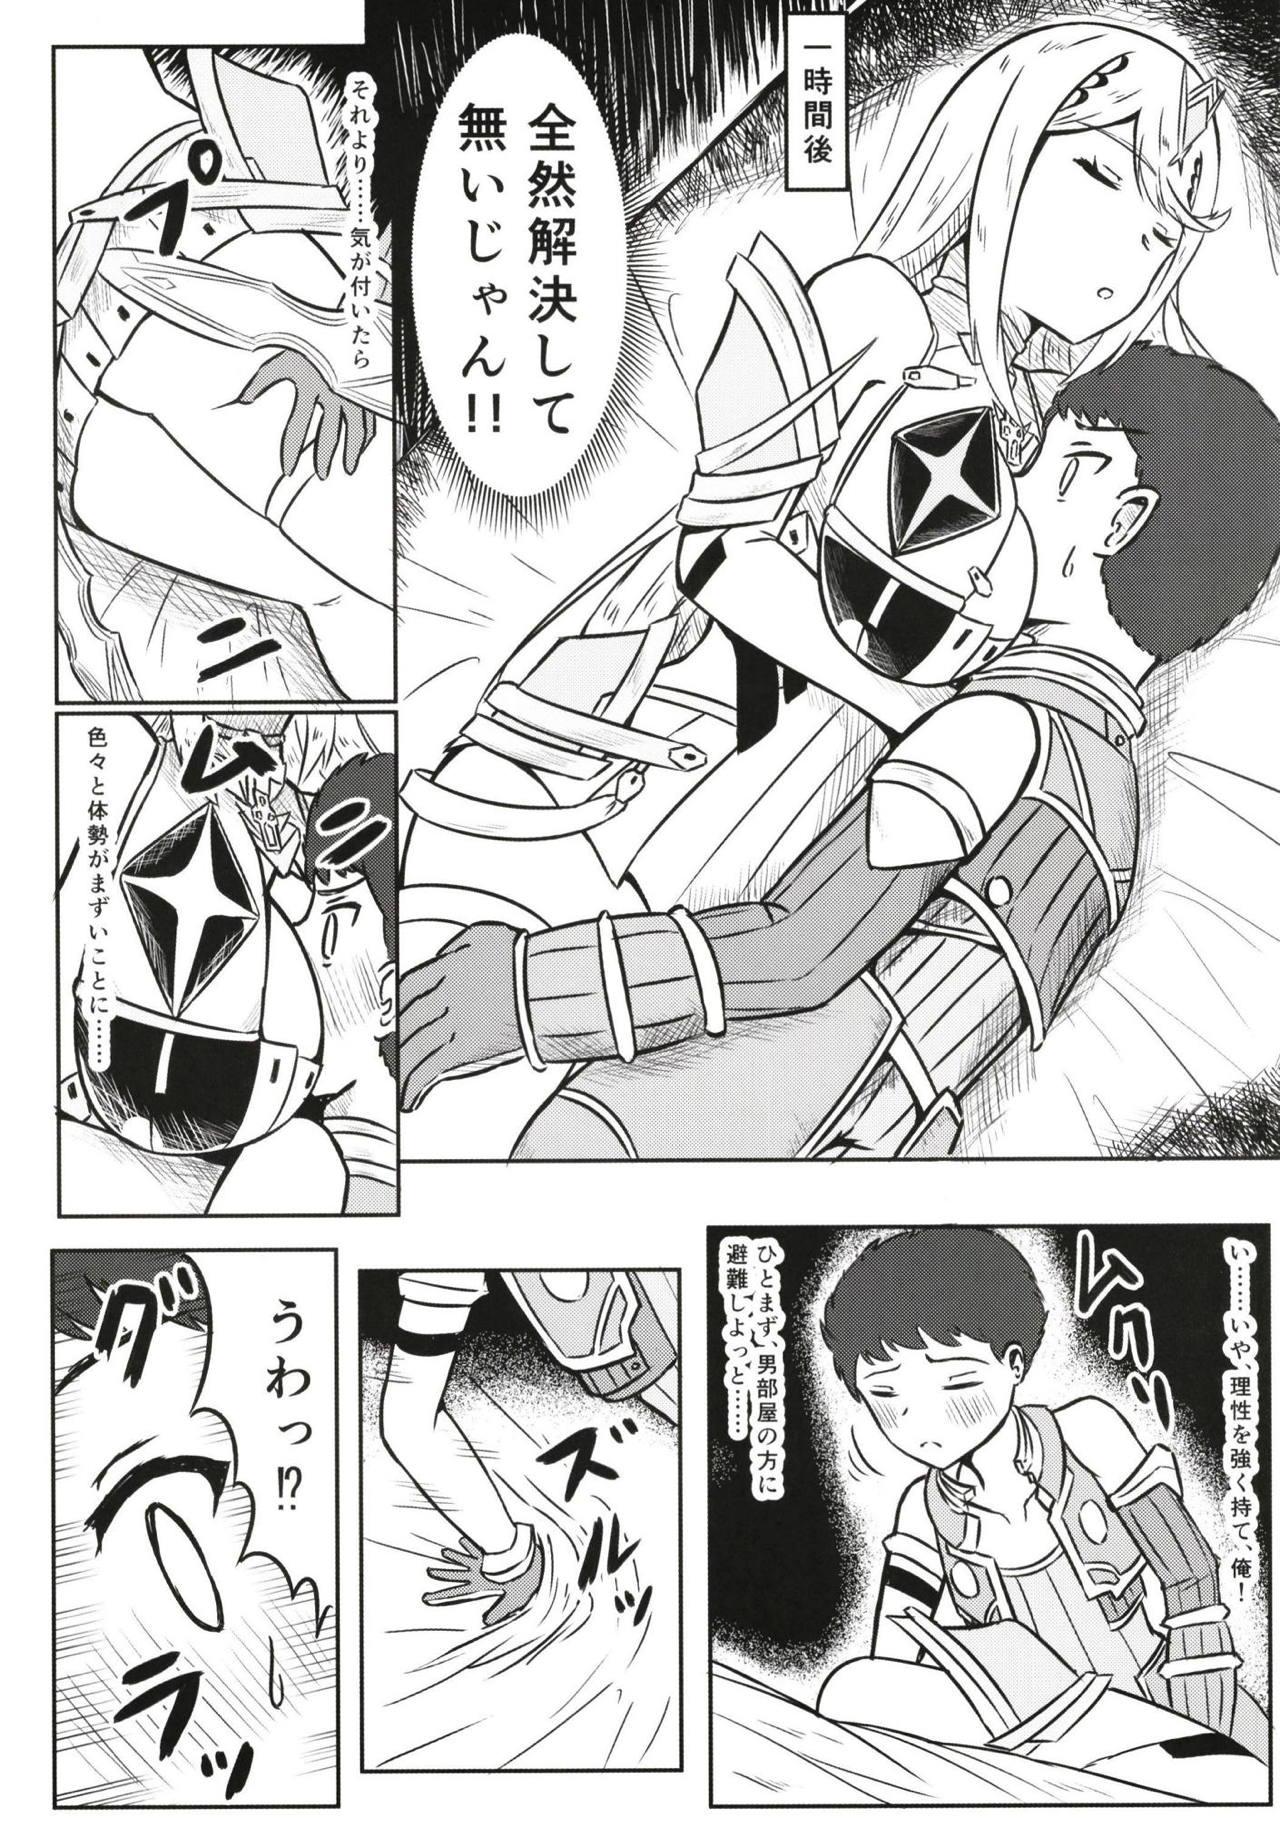 Muscle Yoru no Seihai - Xenoblade chronicles 2 Husband - Page 4